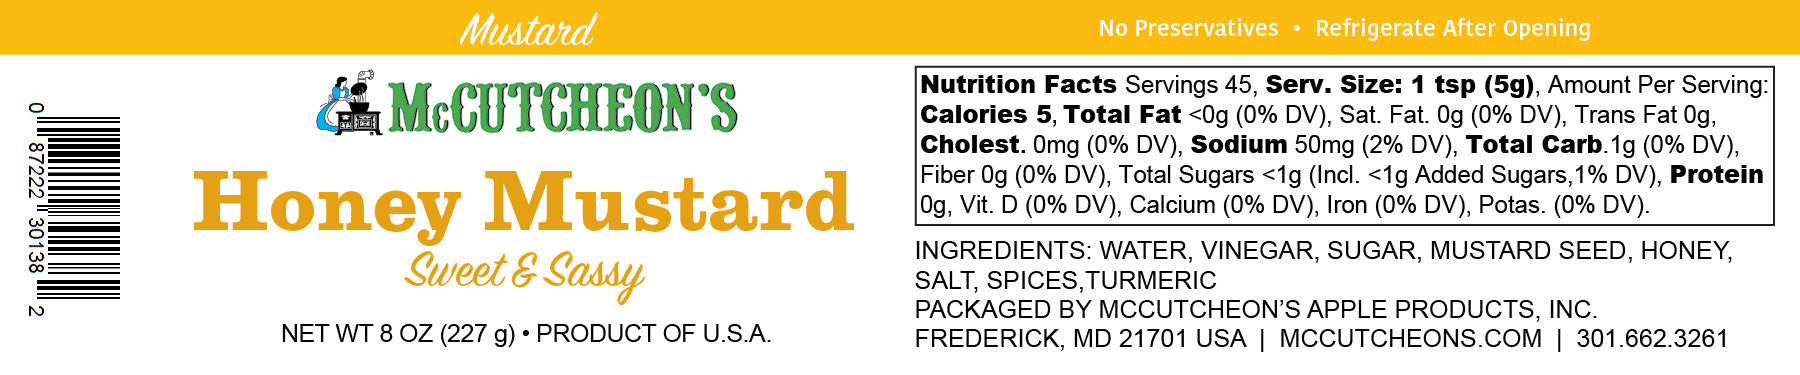 nutritional label for McCutcheon's mini honey mustard